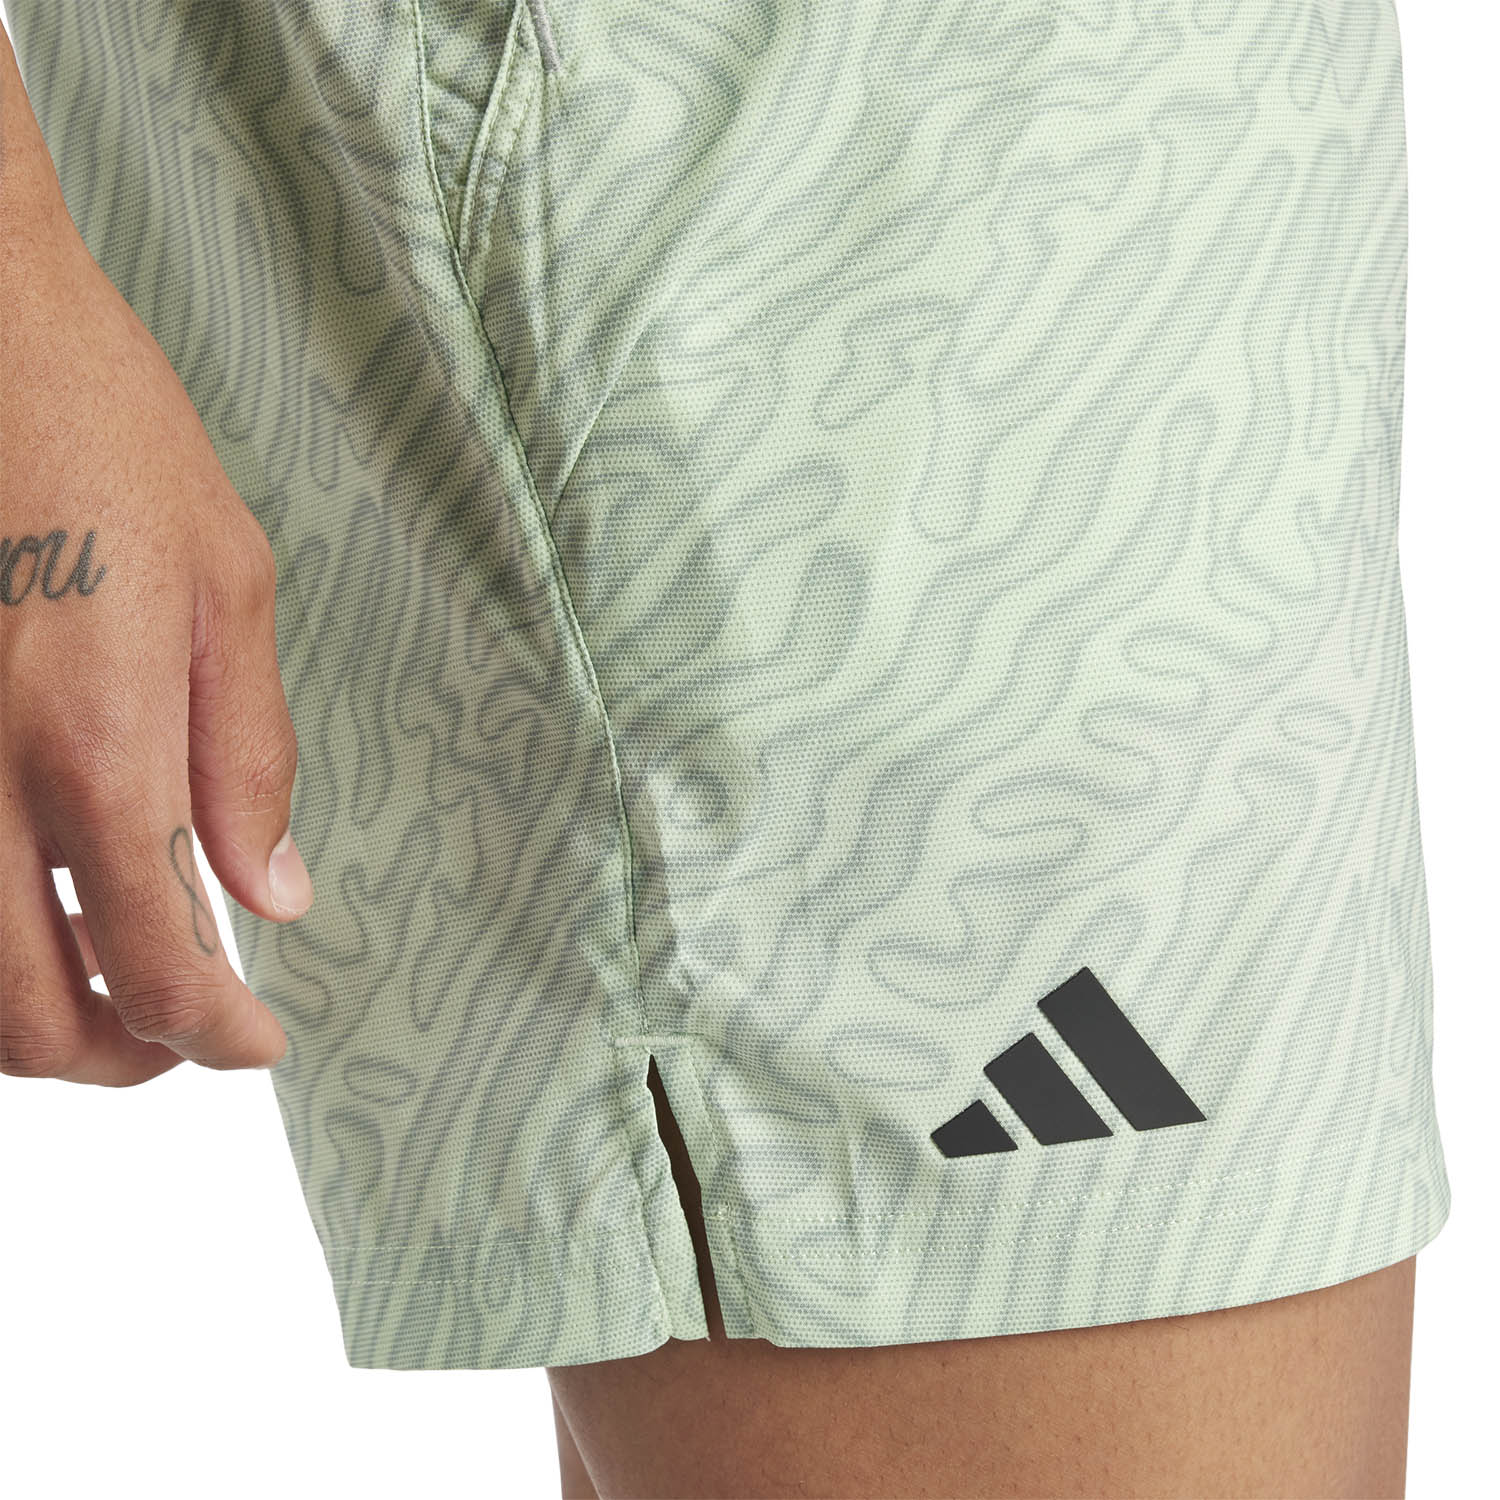 adidas Ergo Pro 7in Shorts - Semi Green Spark/Silver Green